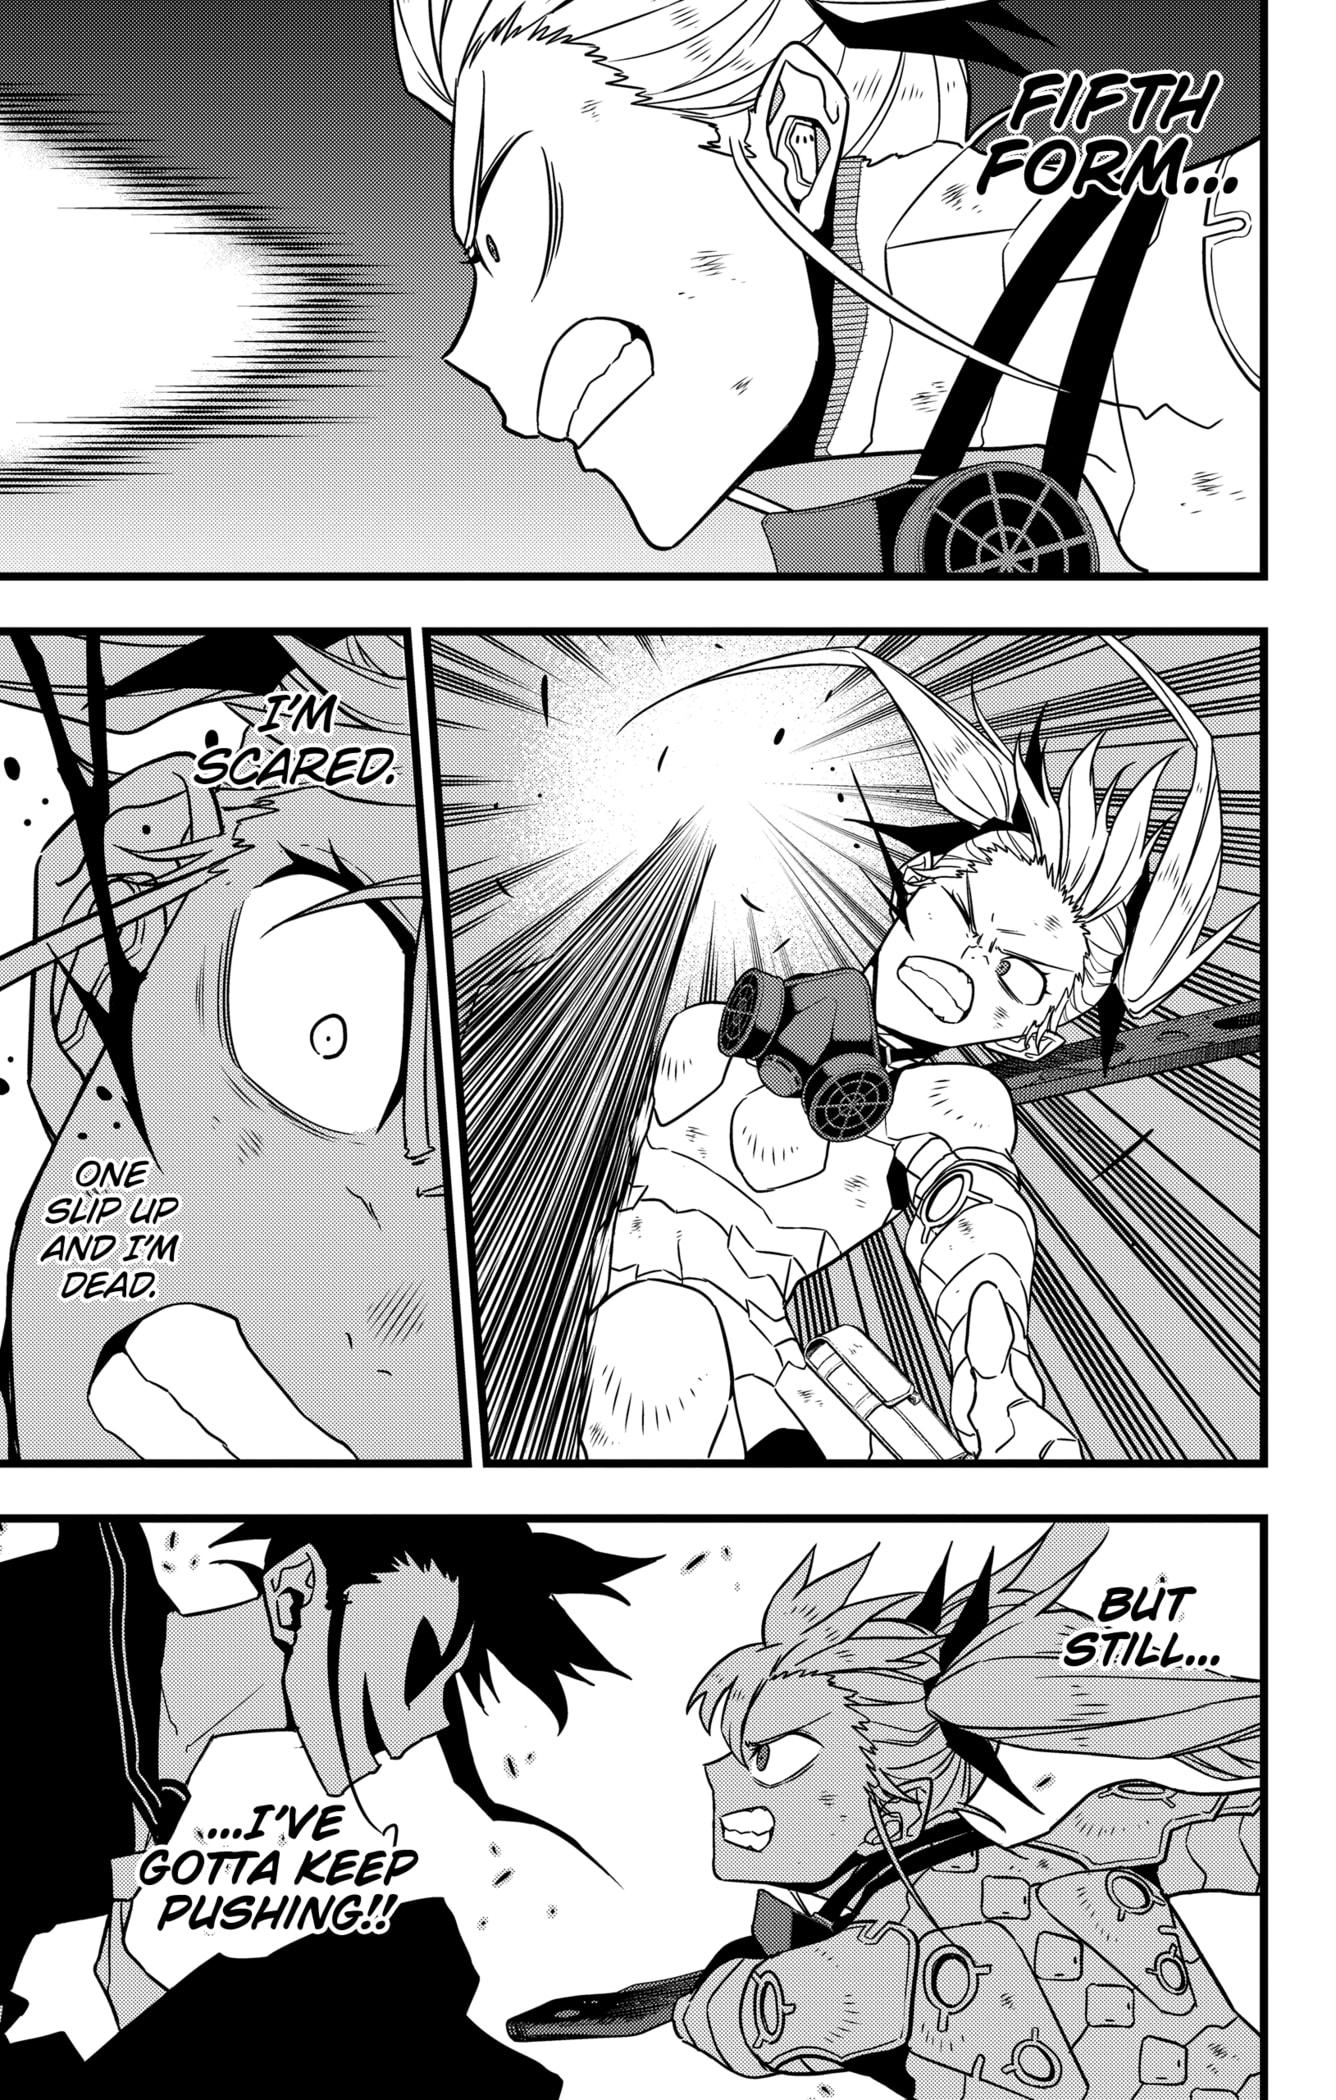 Kaiju No. 8 Chapter 78 page 9 - Mangakakalot